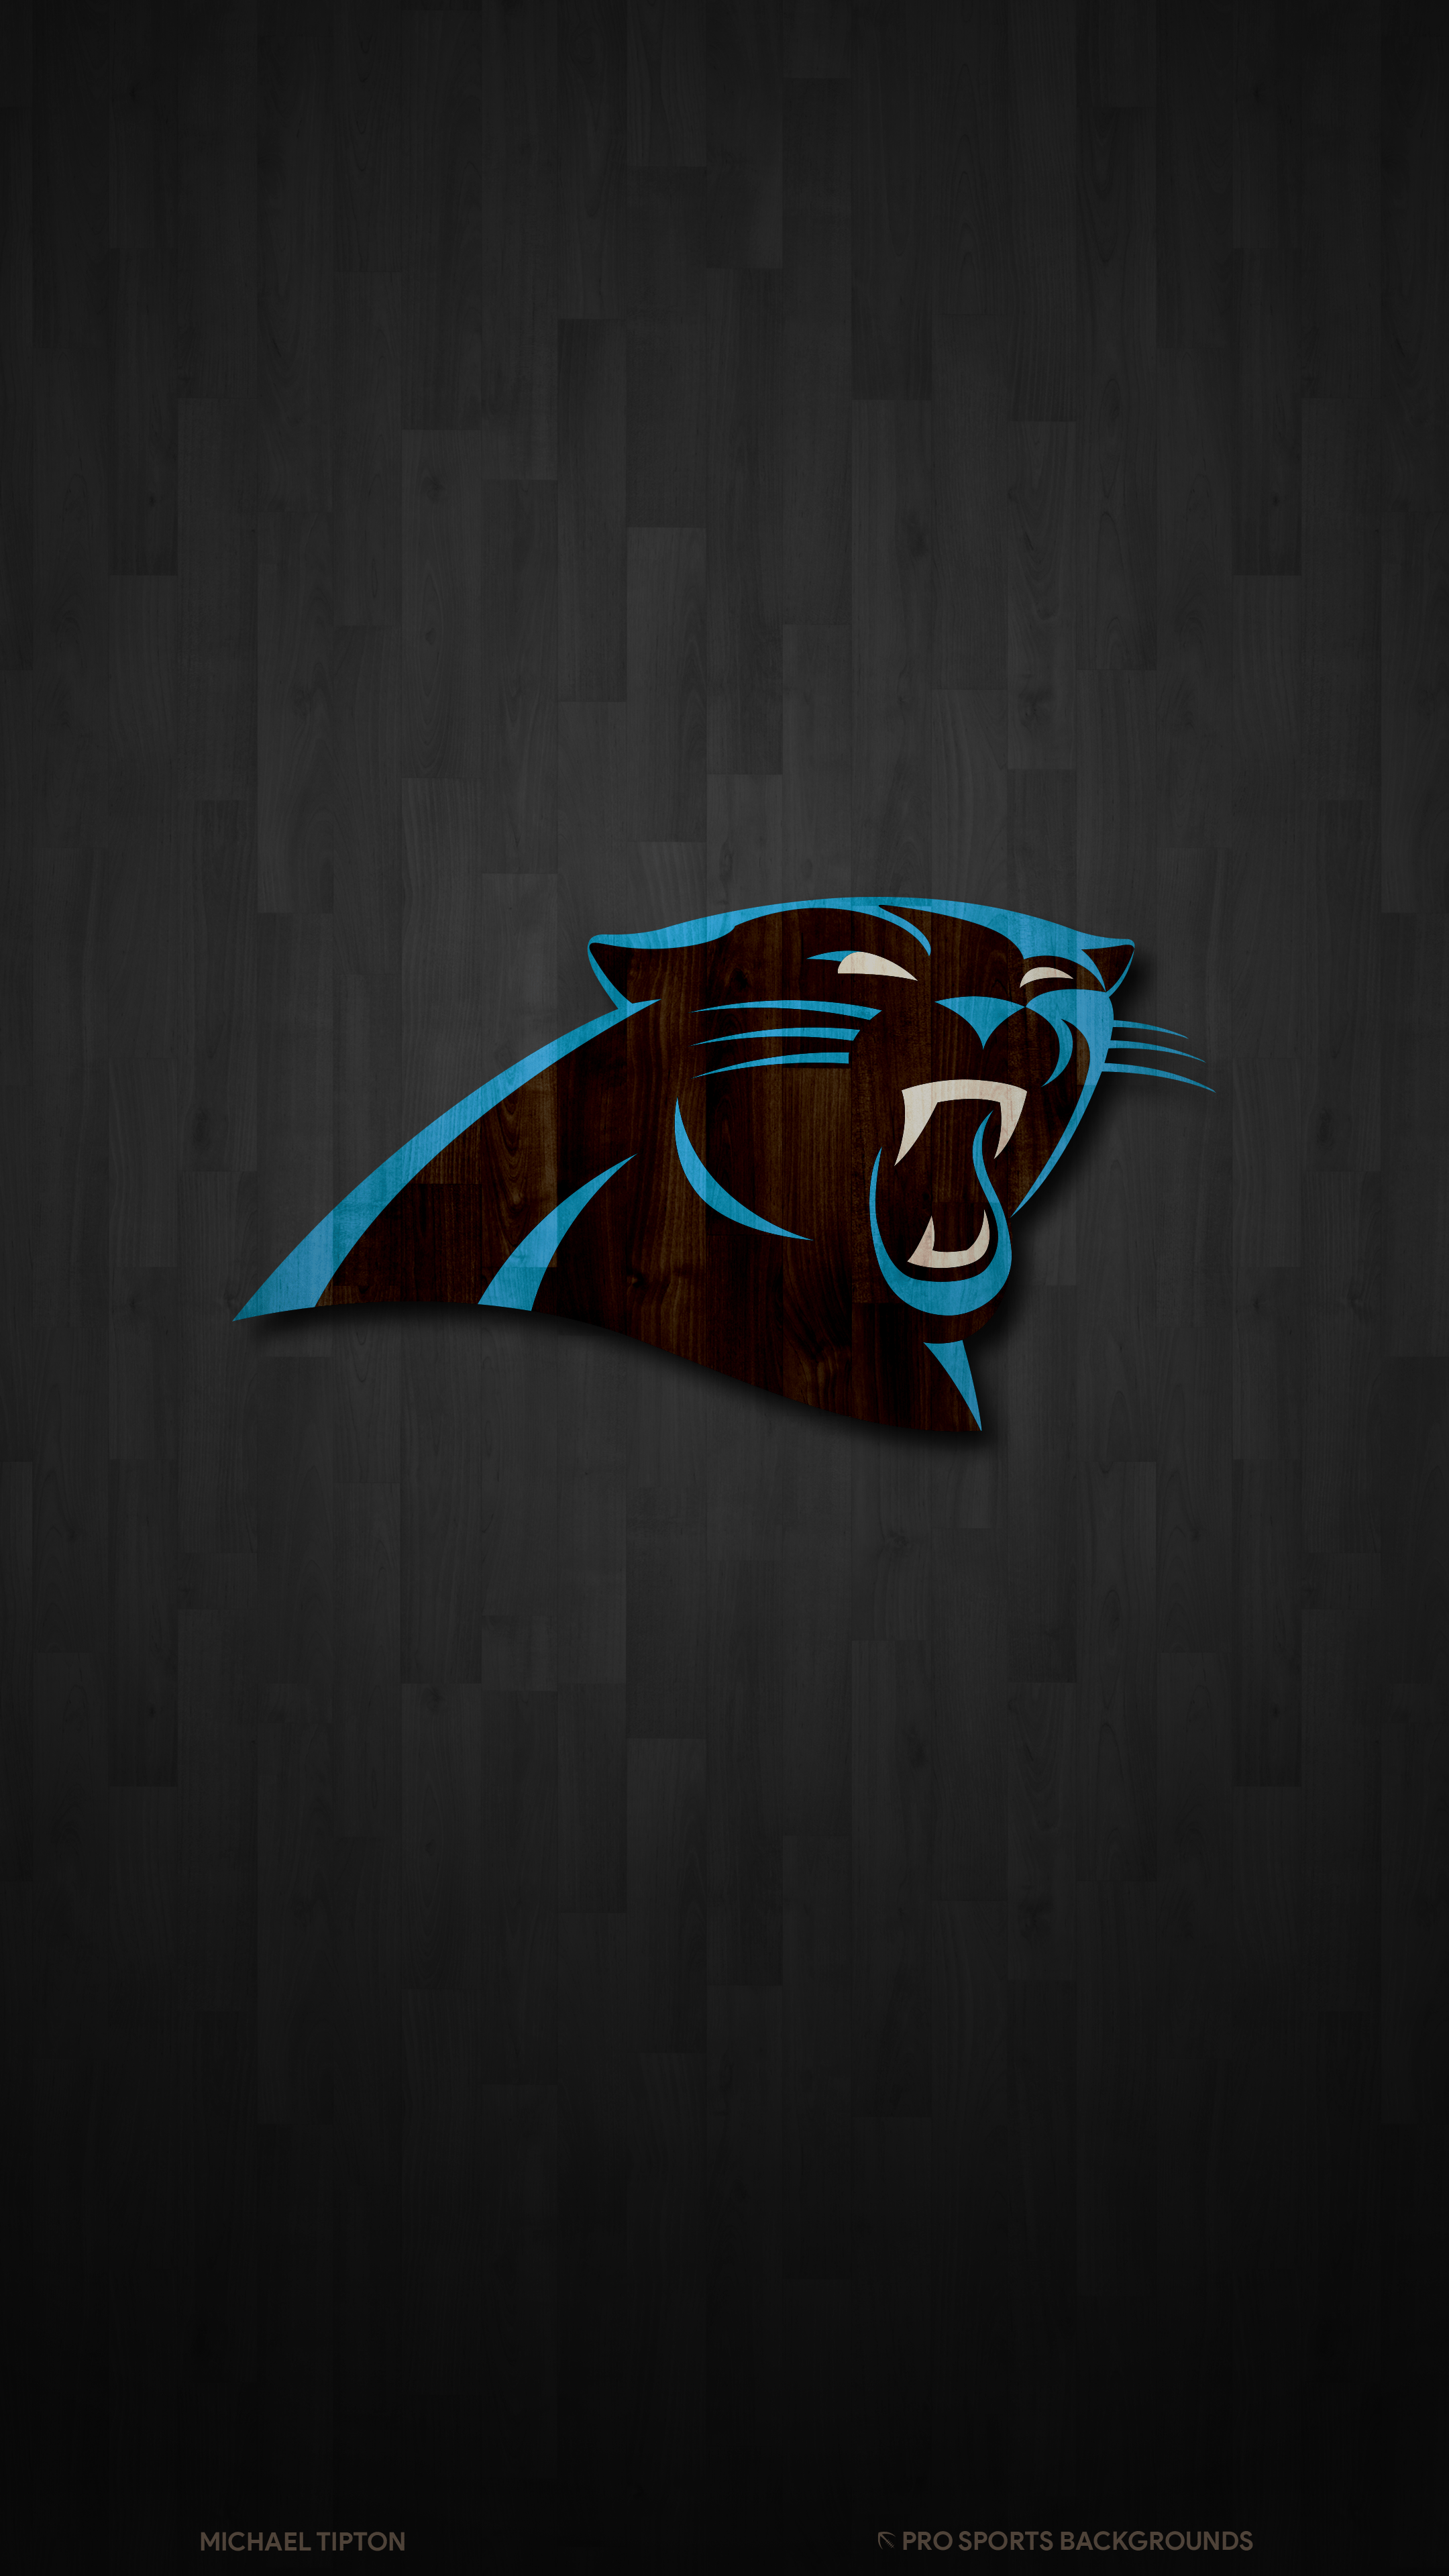 Carolina Panthers on Twitter Gameday wallpaper anyone  httpstcoh8I95Dvag9  Twitter